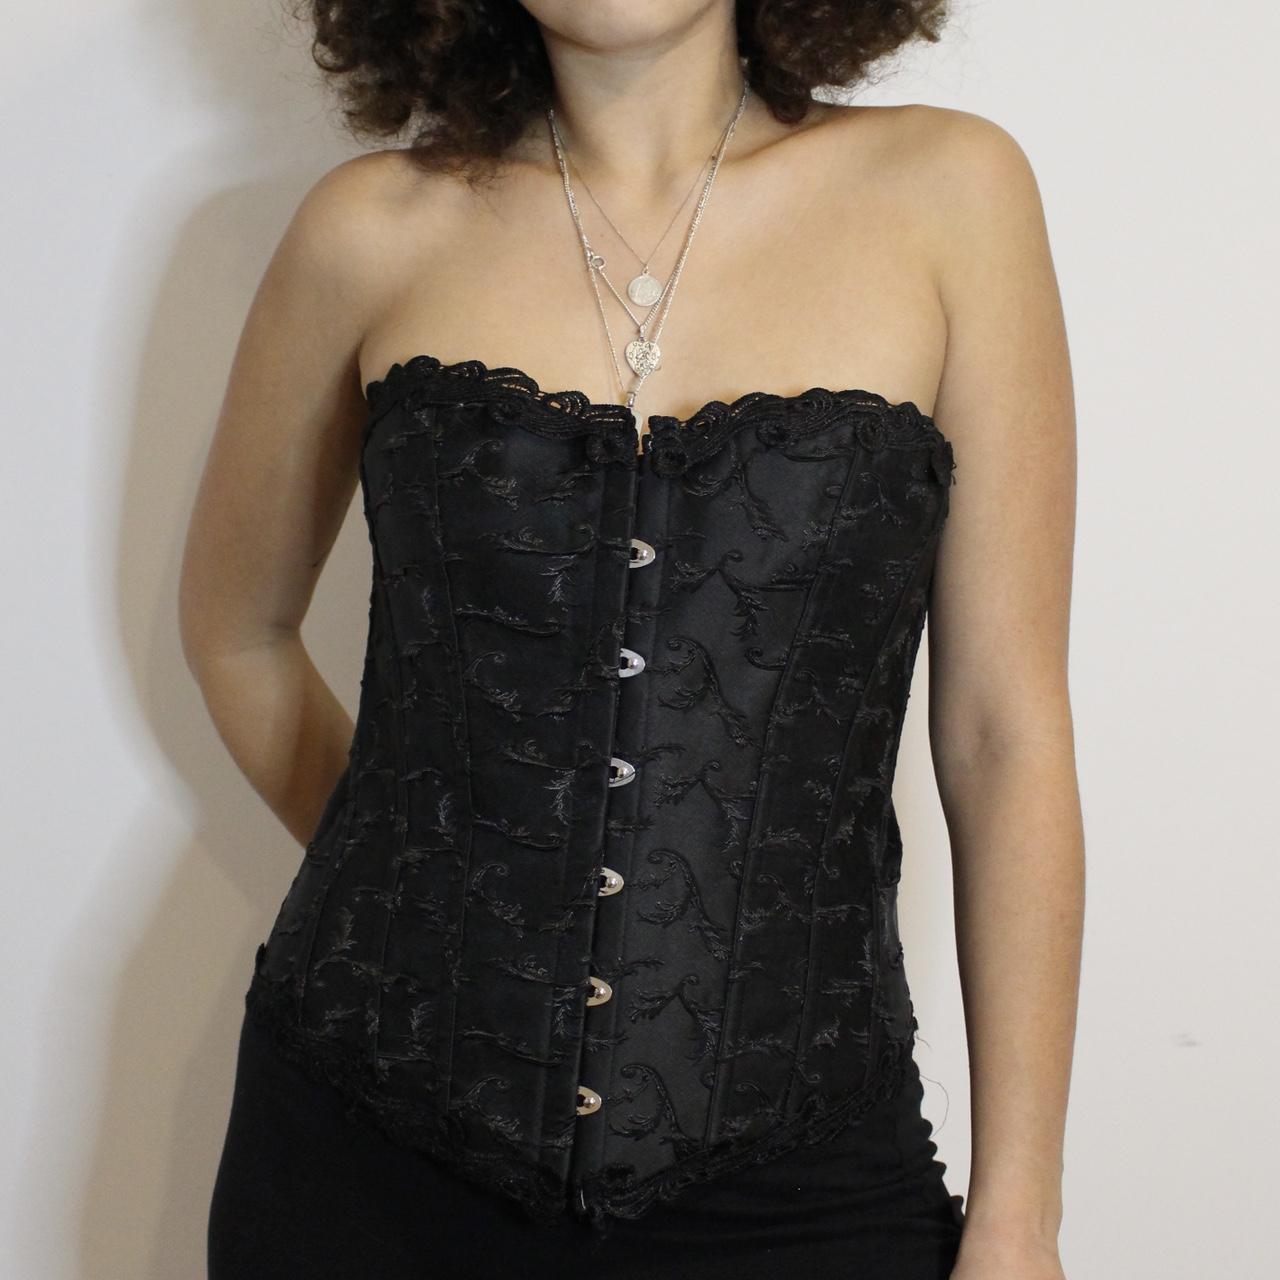 Vaacodor corset, black with incredible detail - Depop